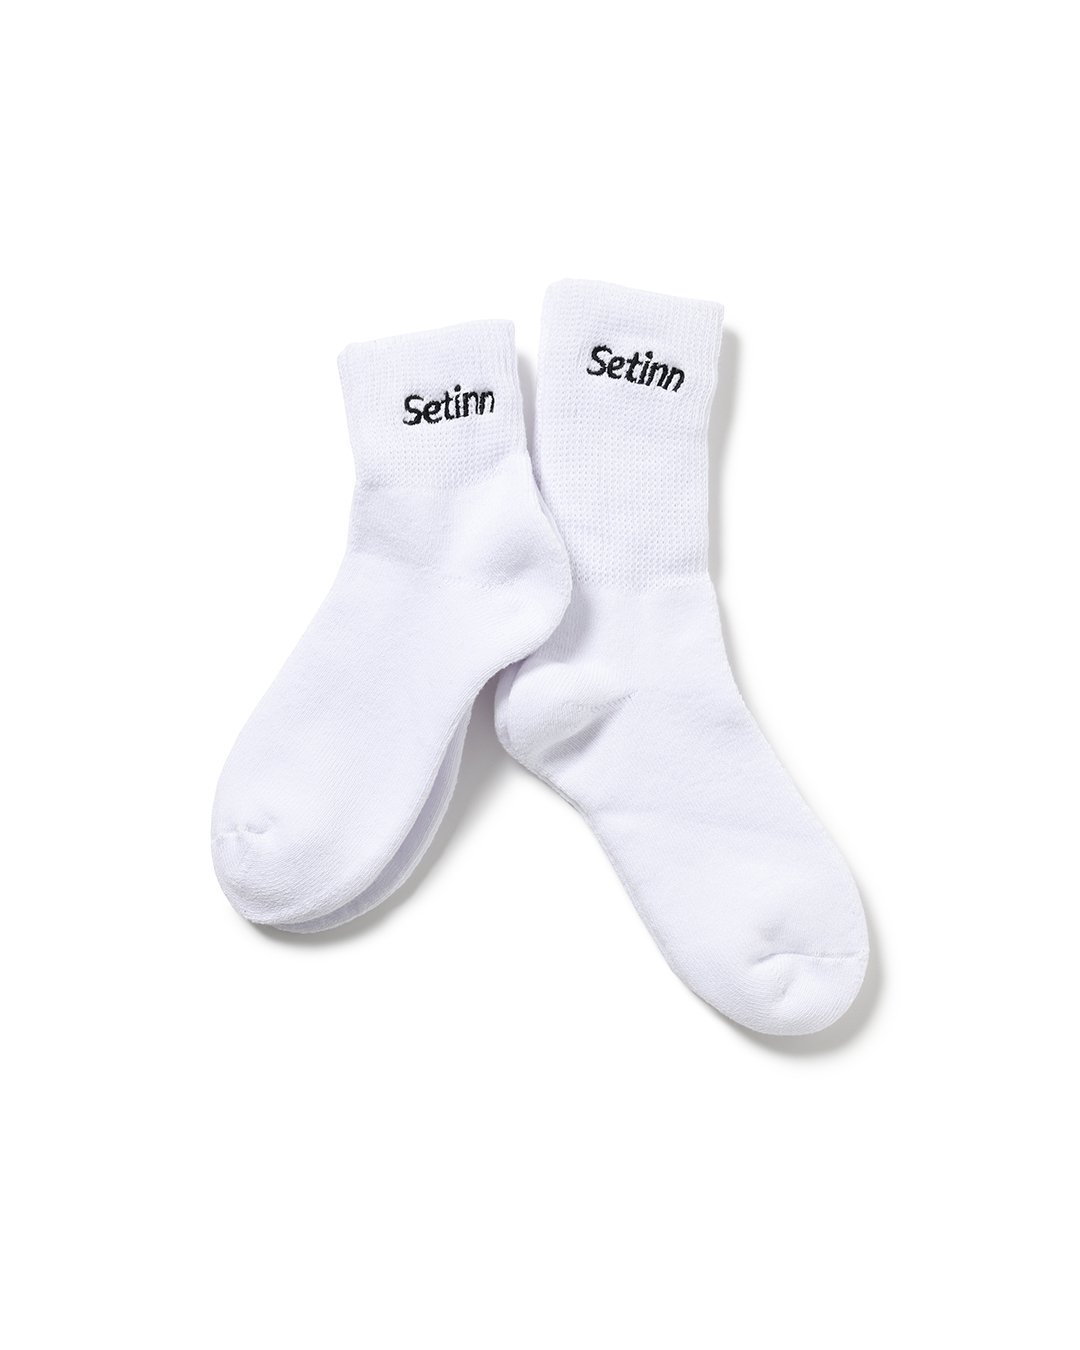 SetinnClub Socks 2P, - Apple Butter Store